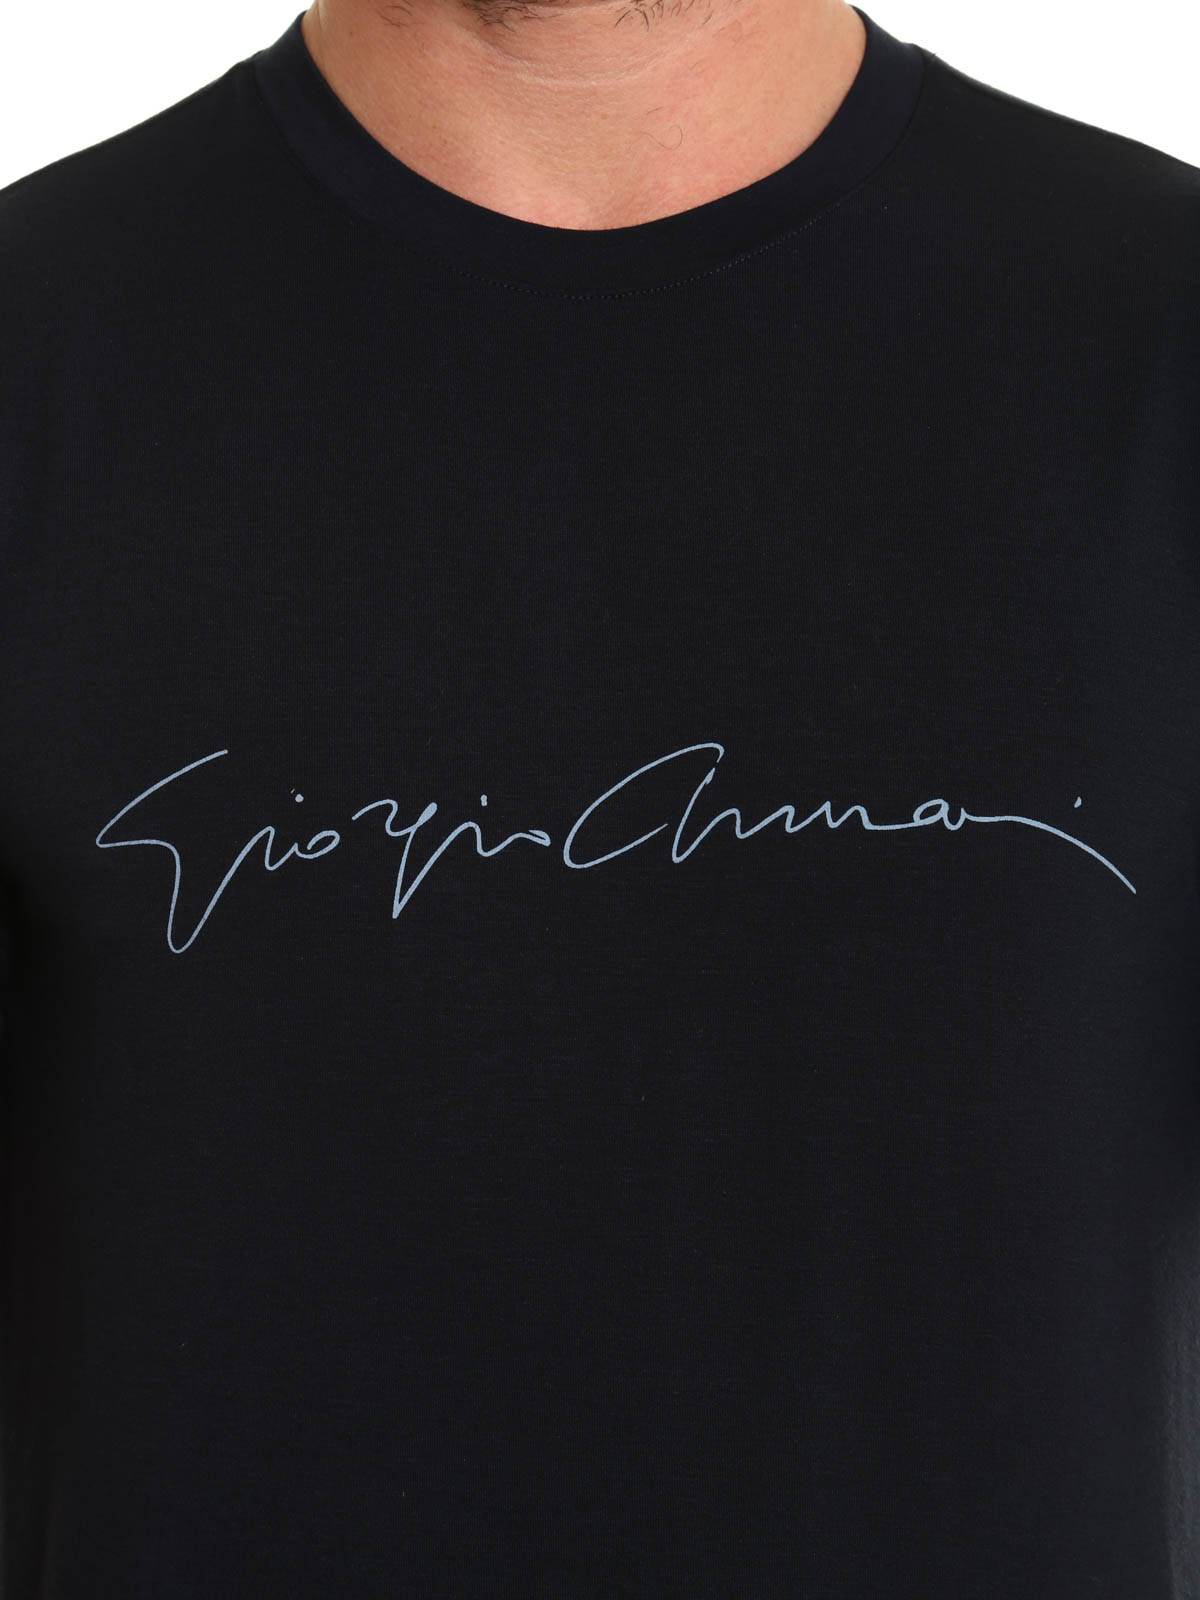 giorgio armani shirts logo